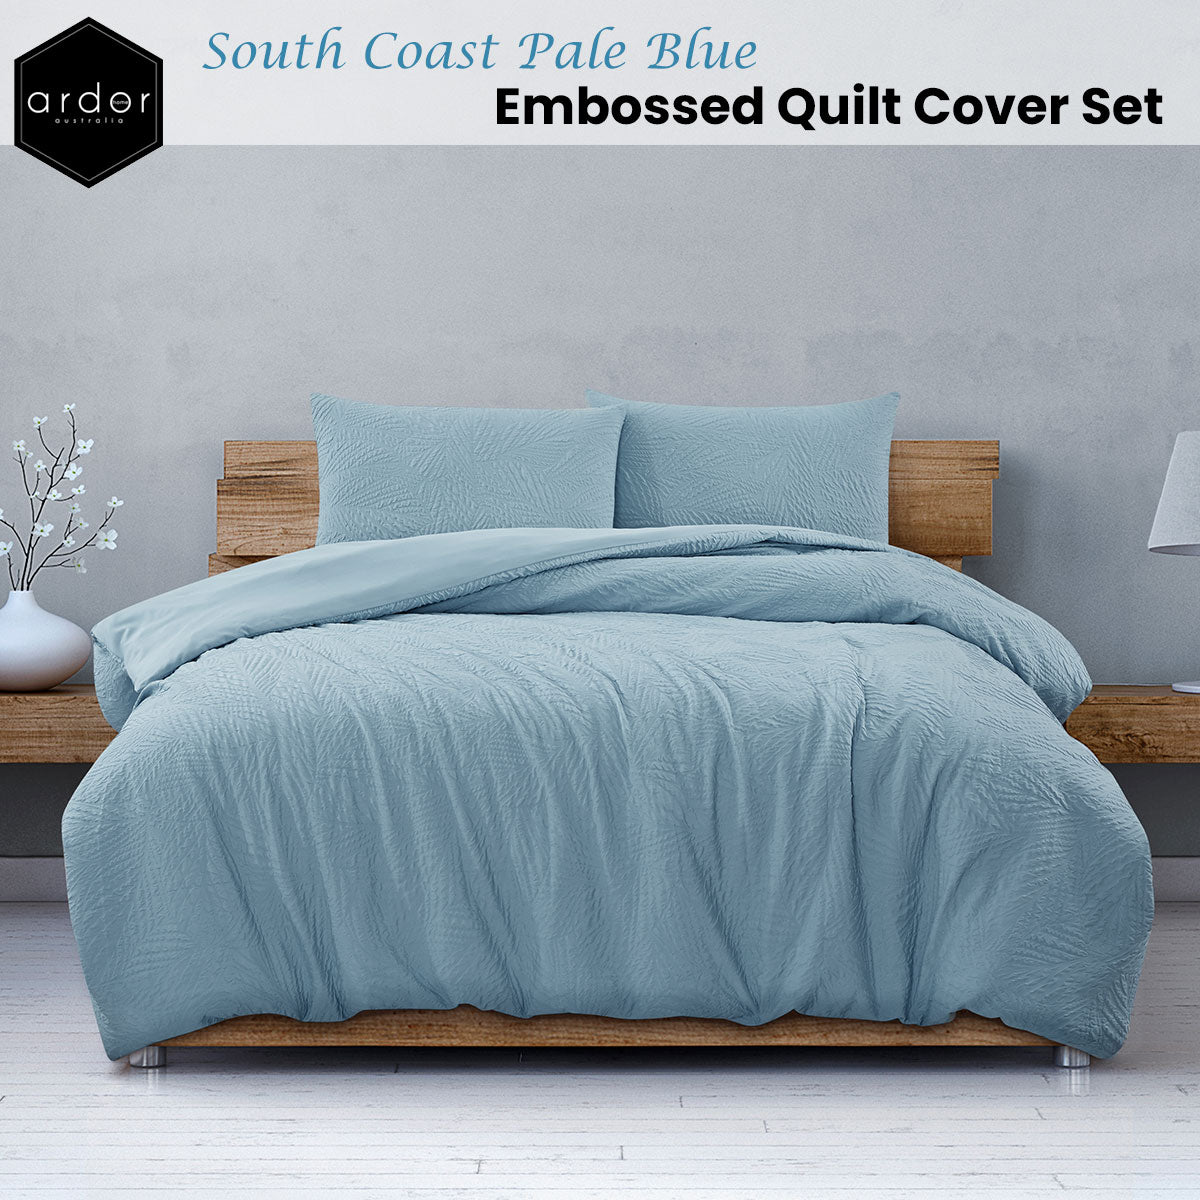 Ardor South Coast Pale Blue Embossed Queen Quilt Cover Set